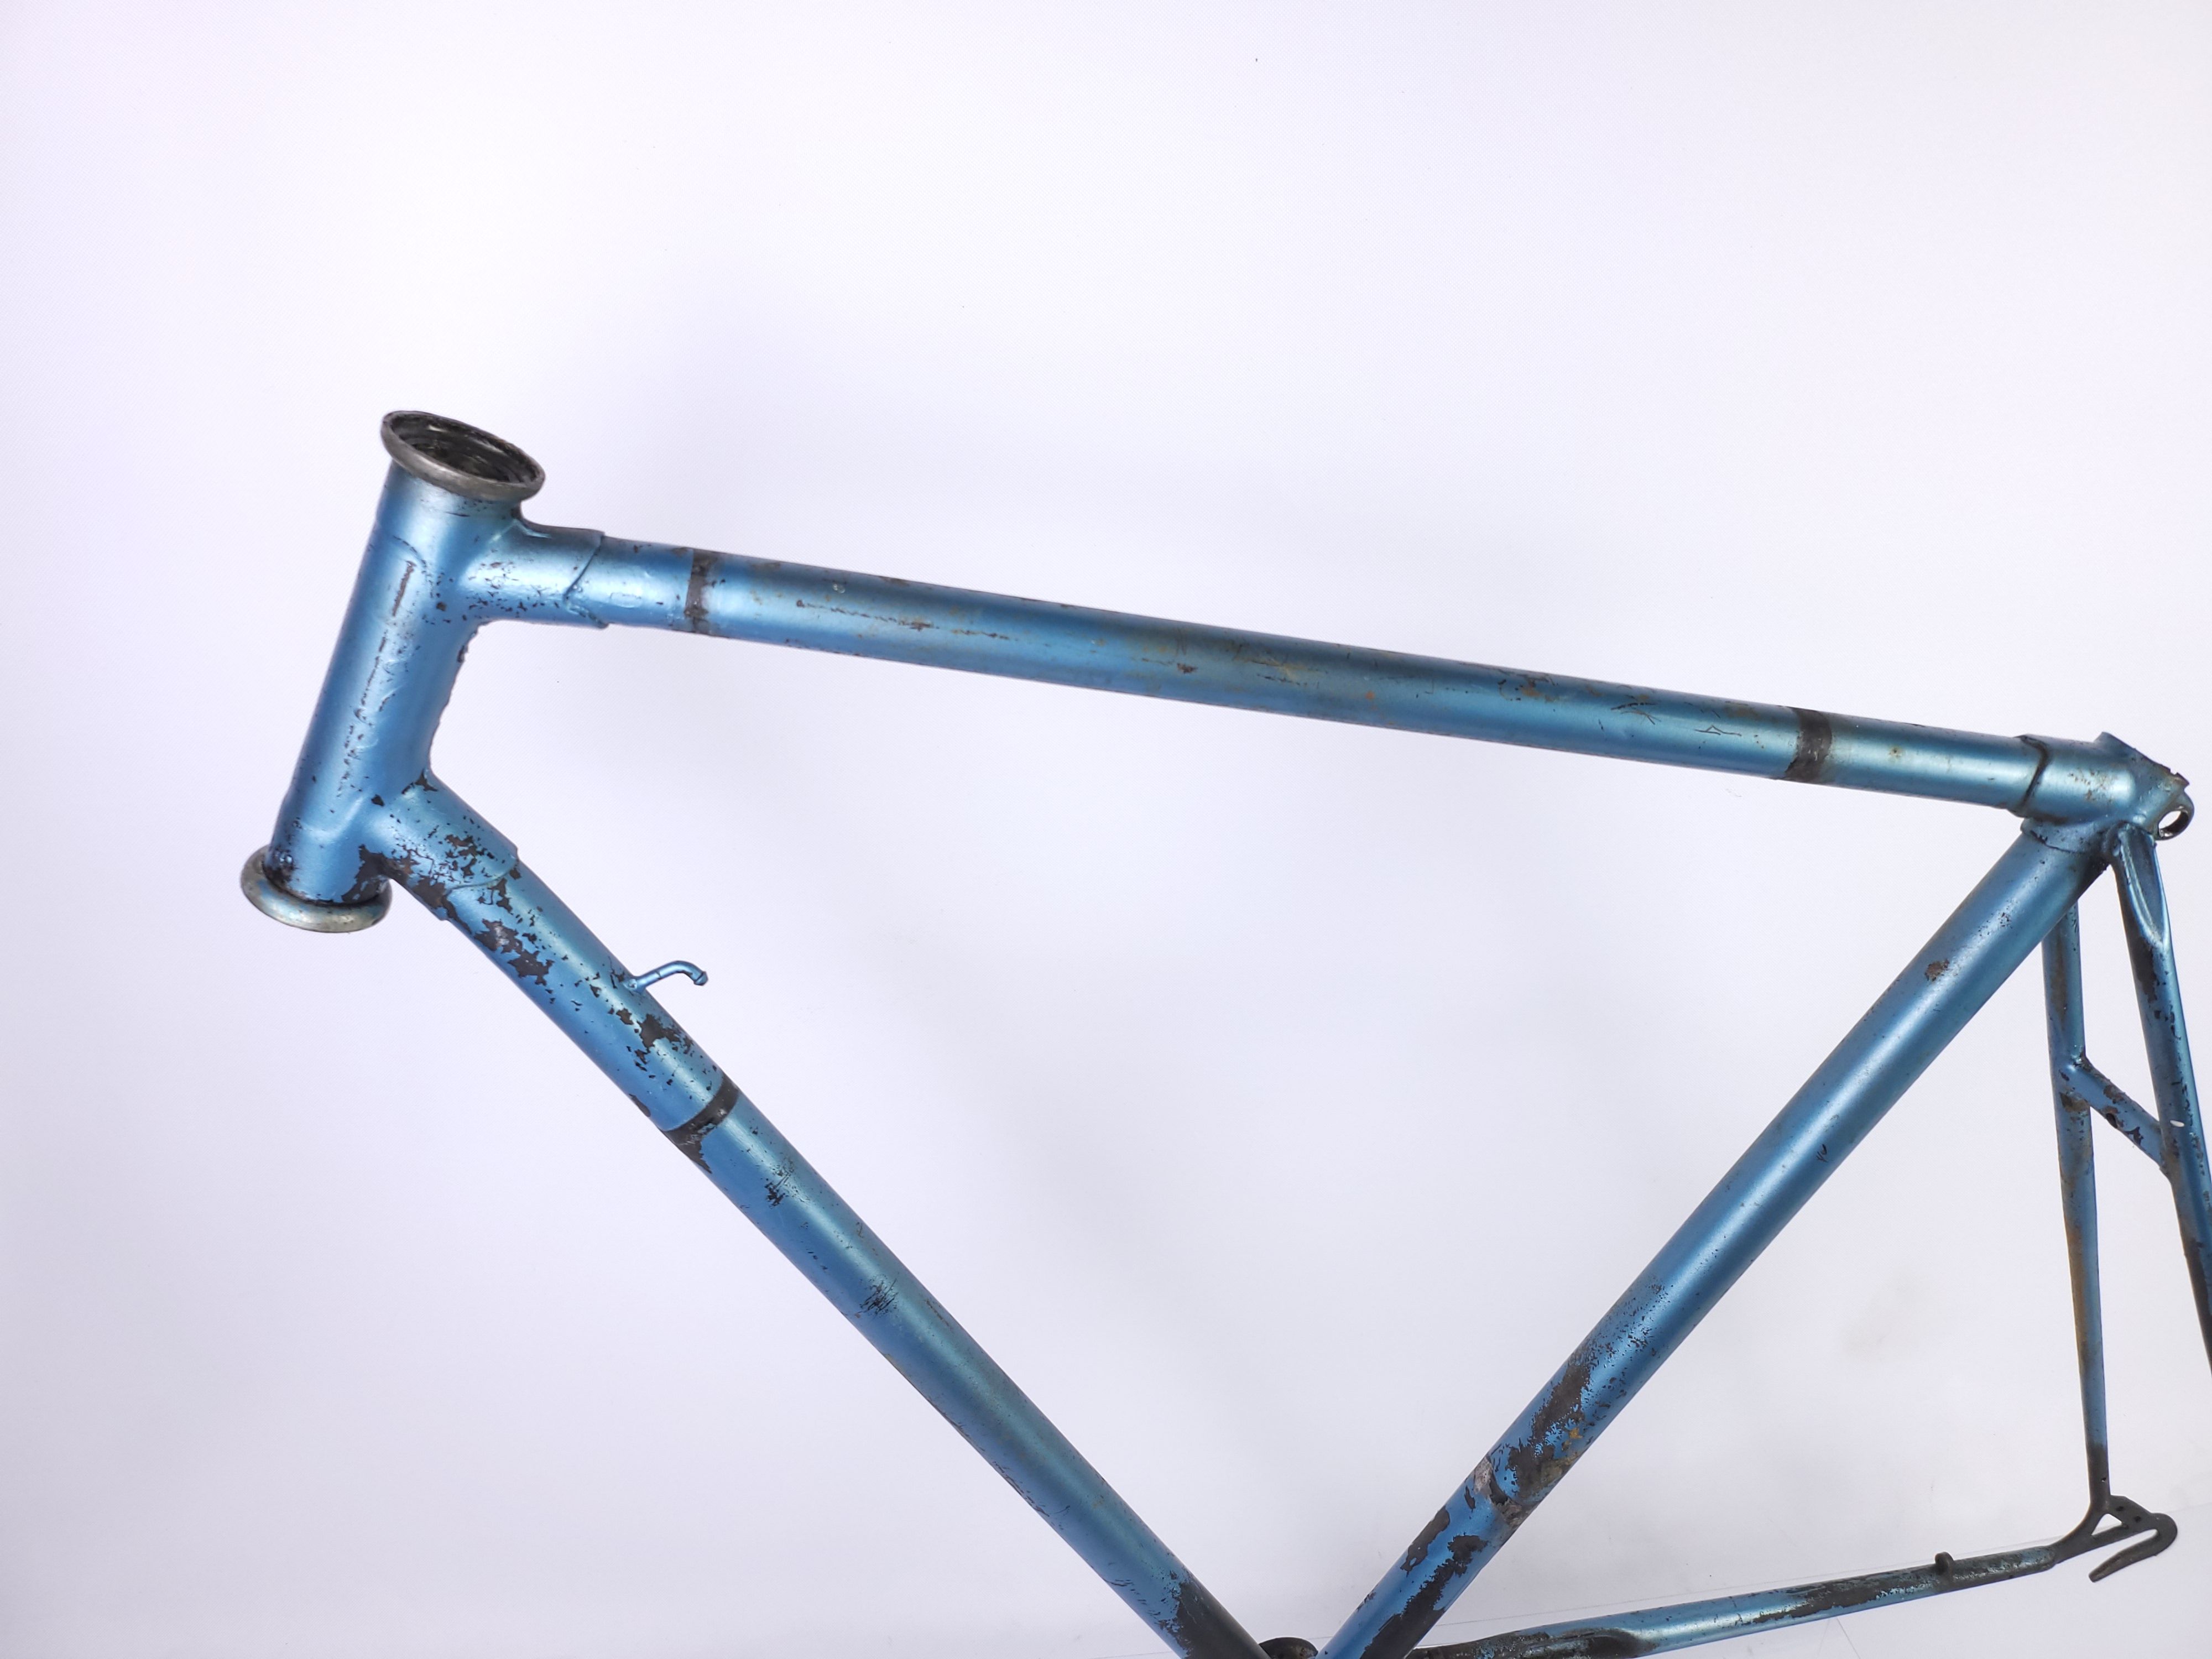 Rama rowerowa Romet Sprint pomalowana